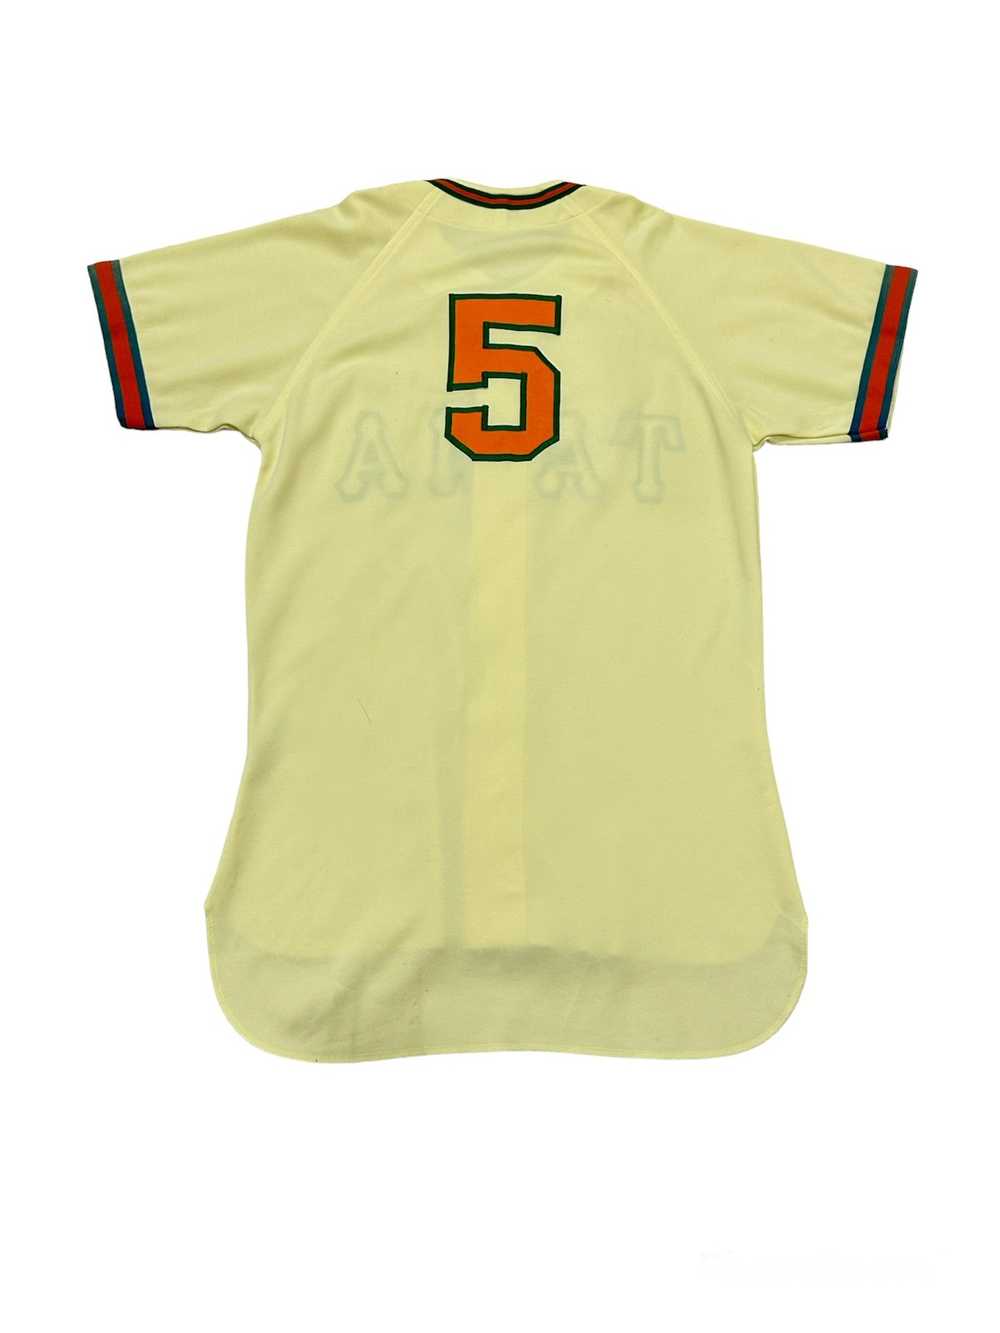 Vintage - Vintage TAMA Baseball Jersey - image 2